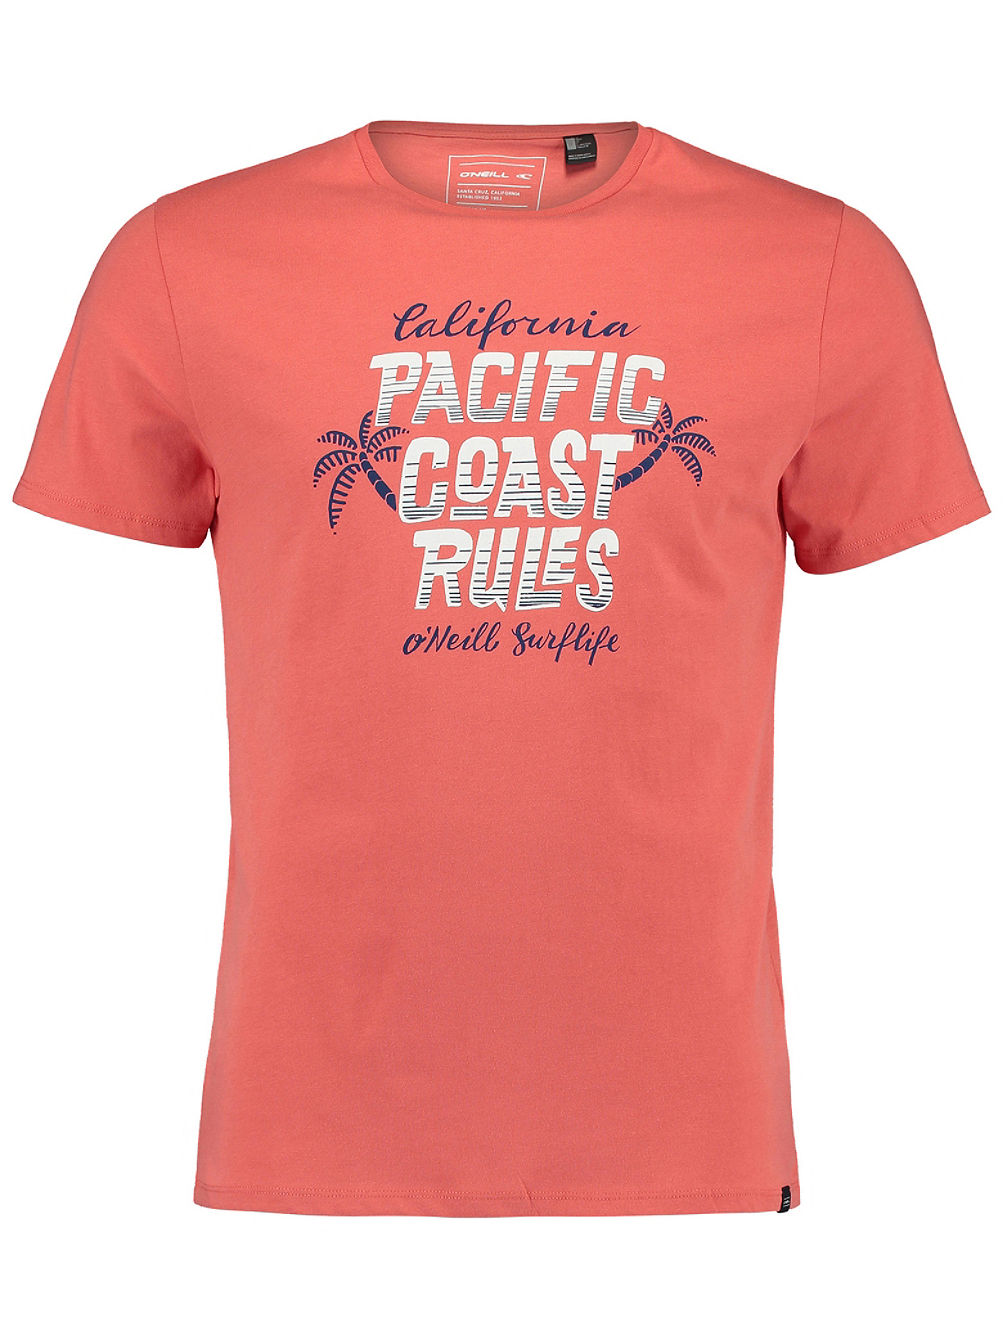 Pacific Coast T-Shirt